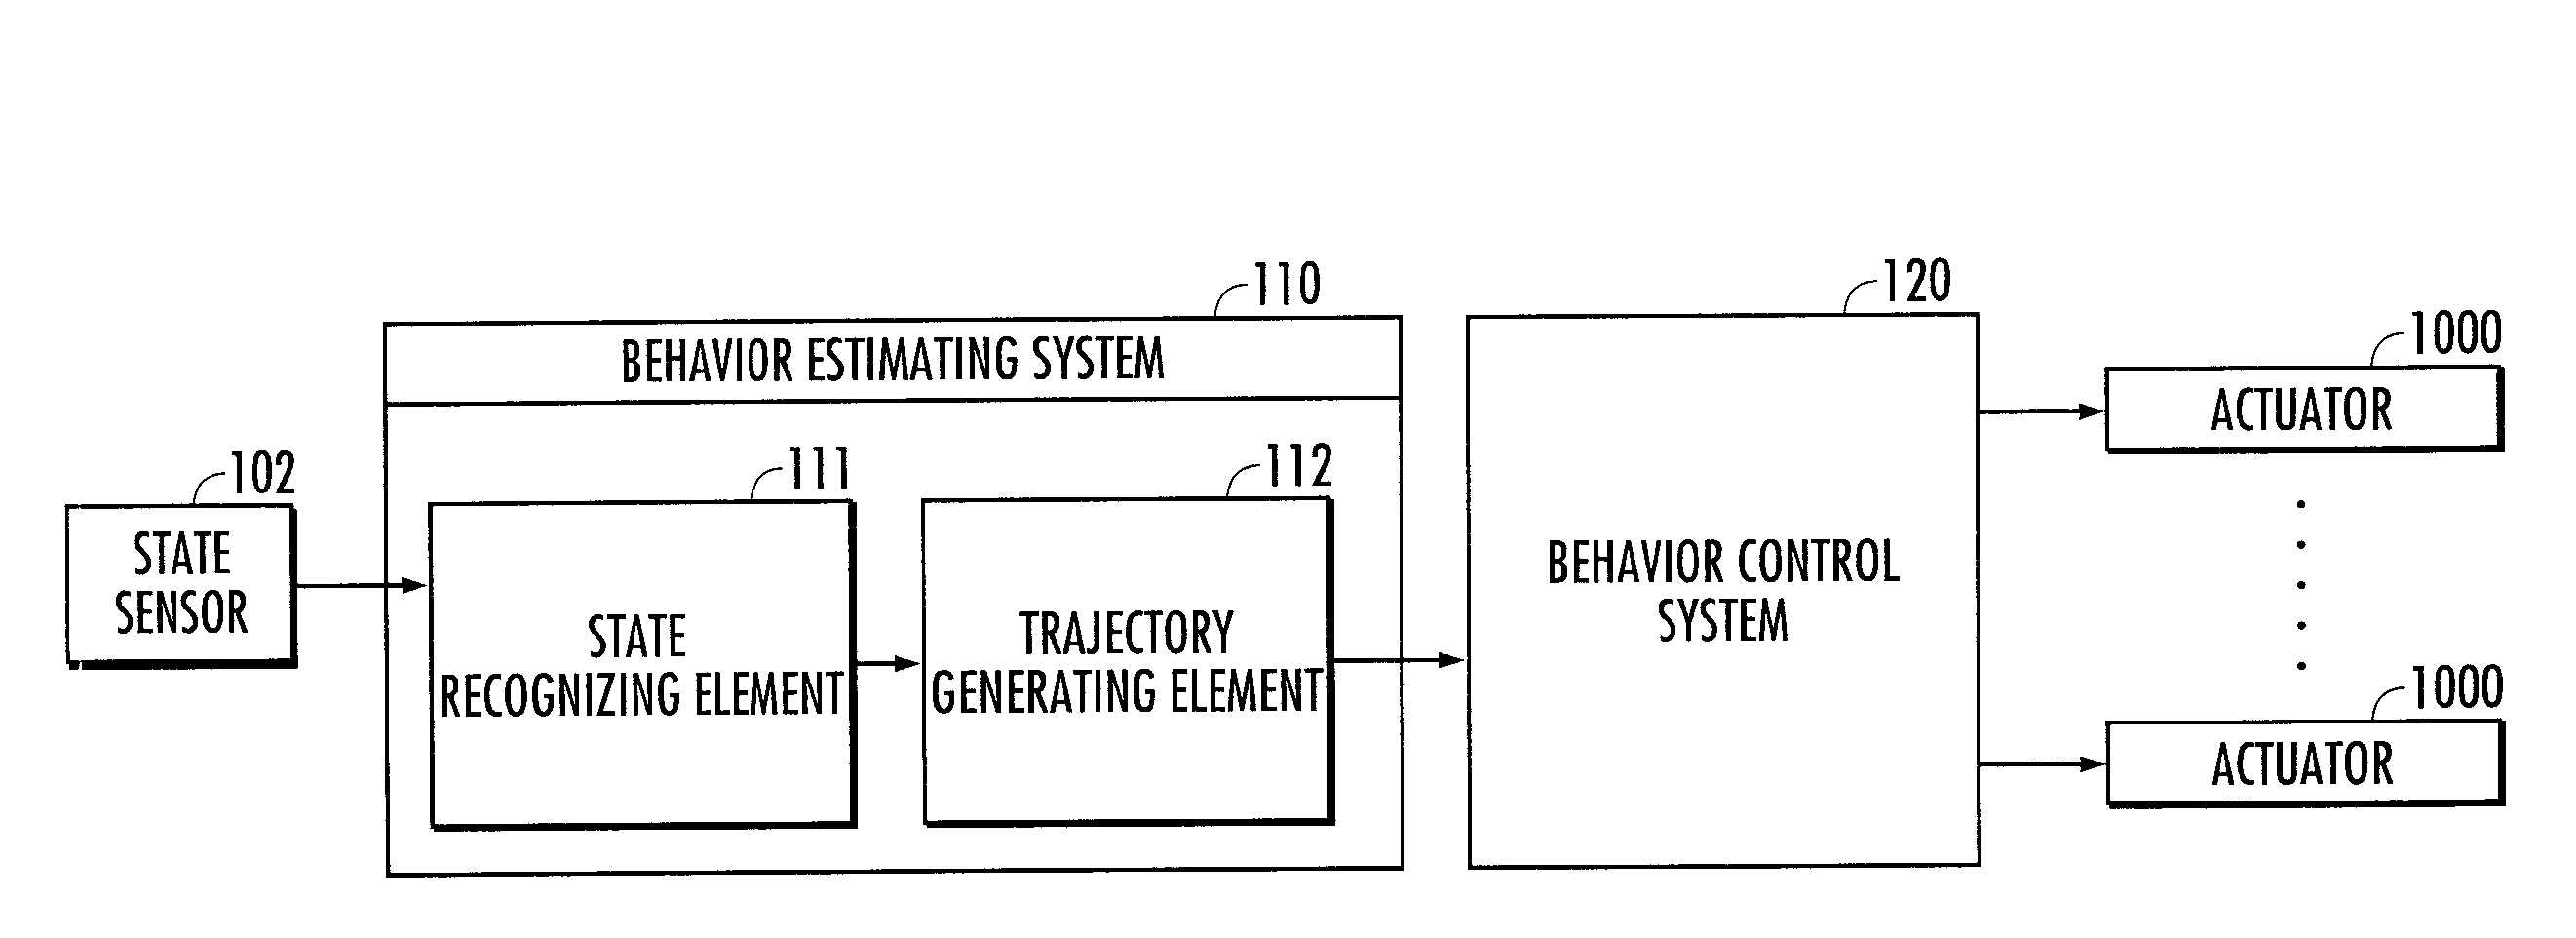 Behavior estimating system